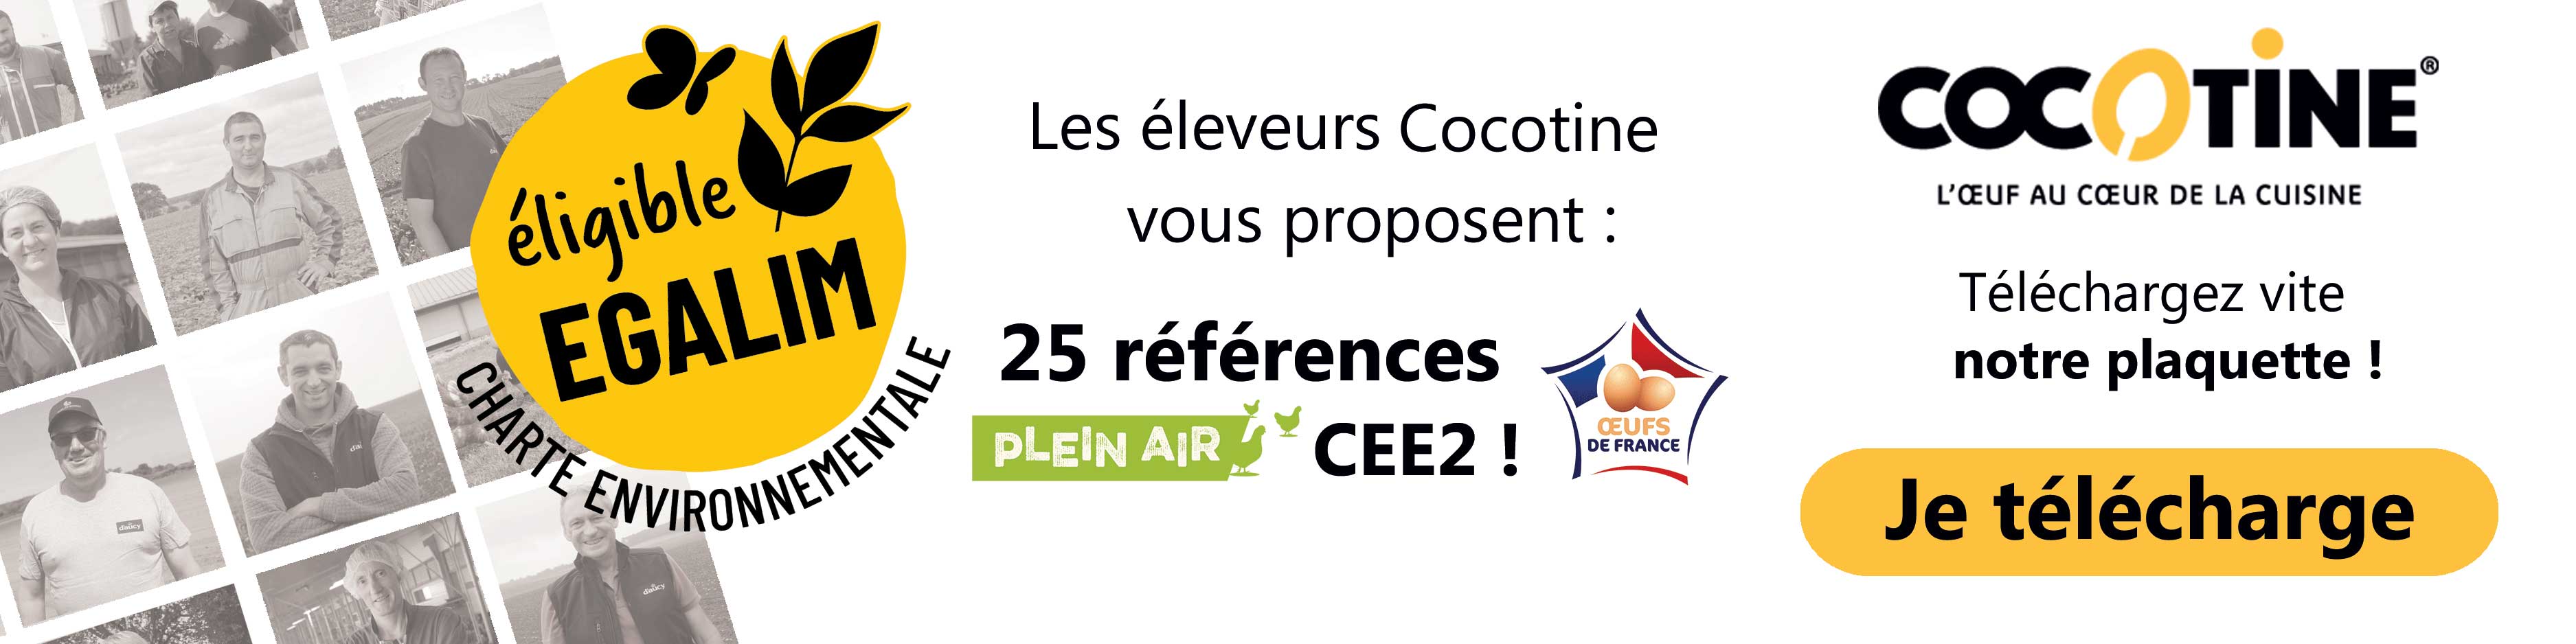 cta-fiche-gamme-cee-cocotine-2